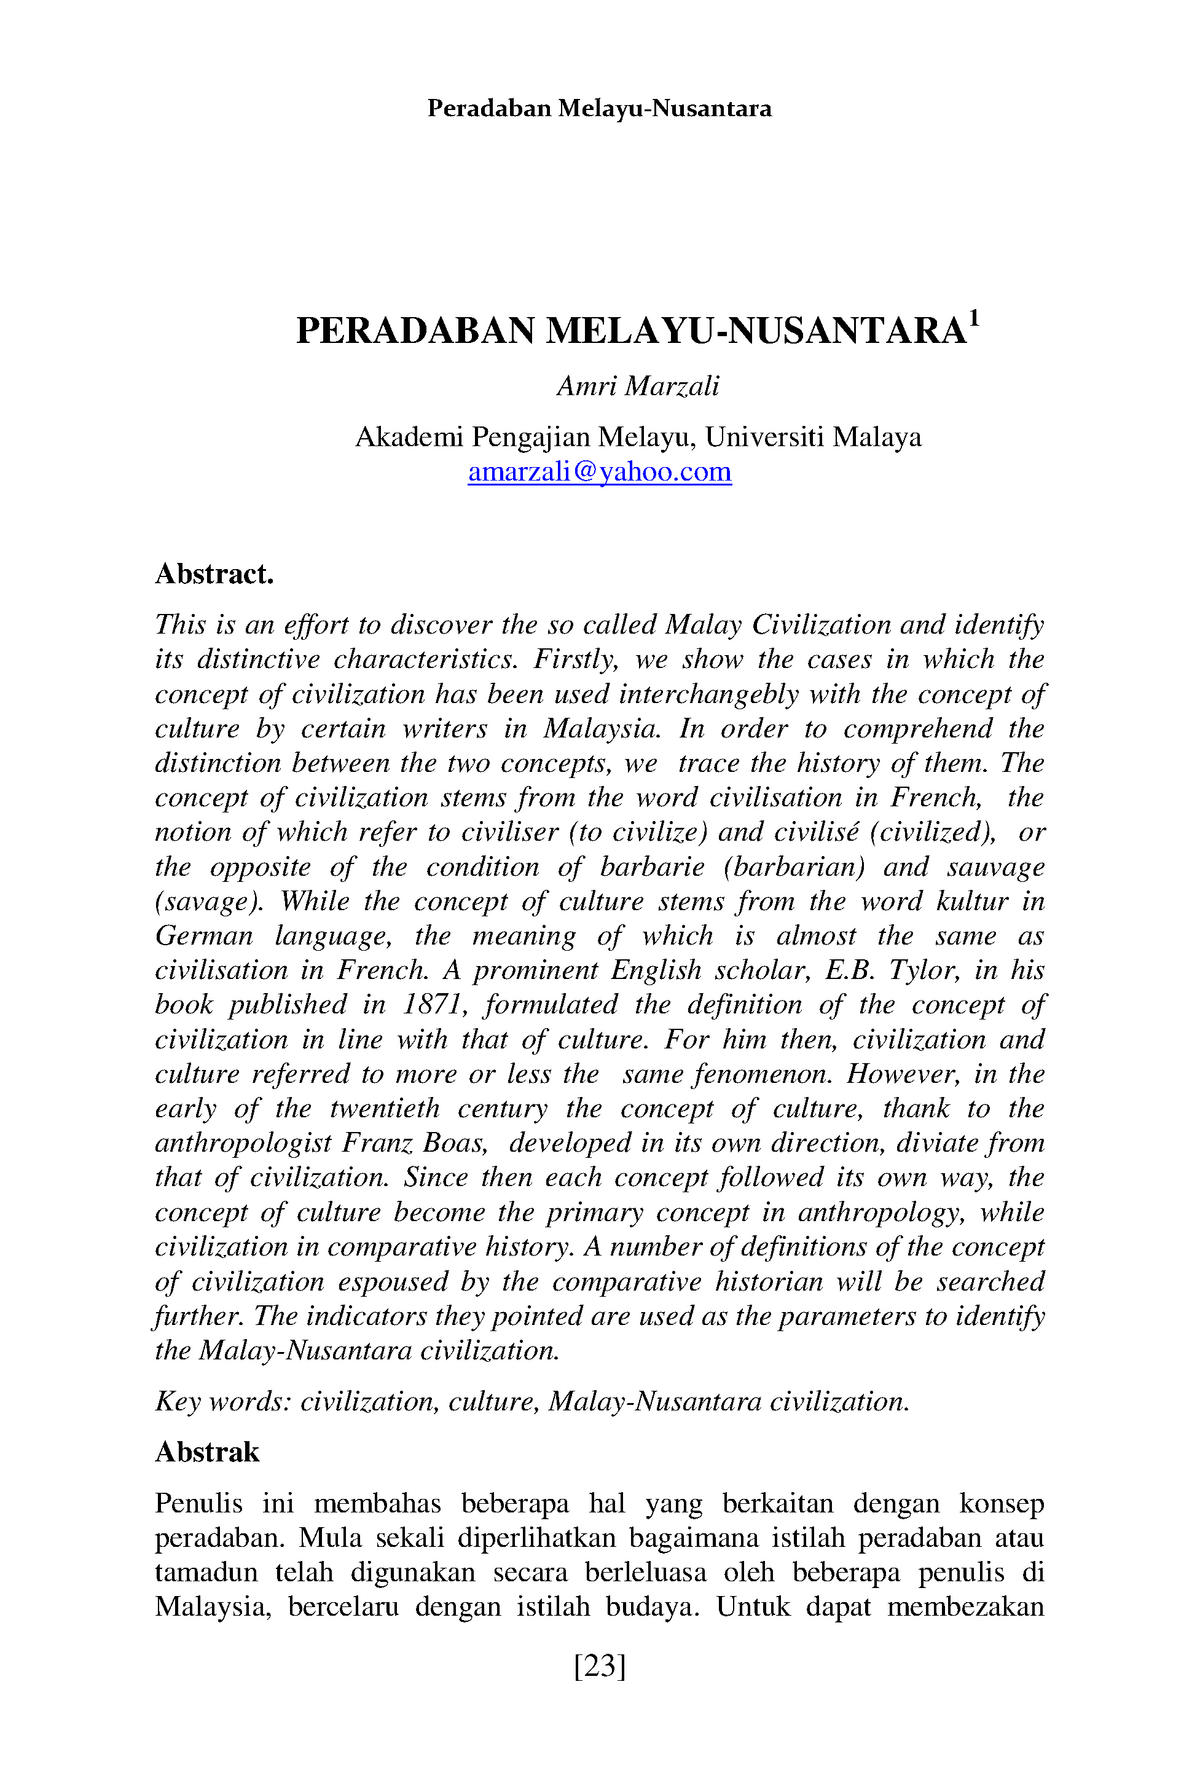 Peradaban Melayu Nusantara - HUBUNGAN ETNIK - GIG1002 - StuDocu